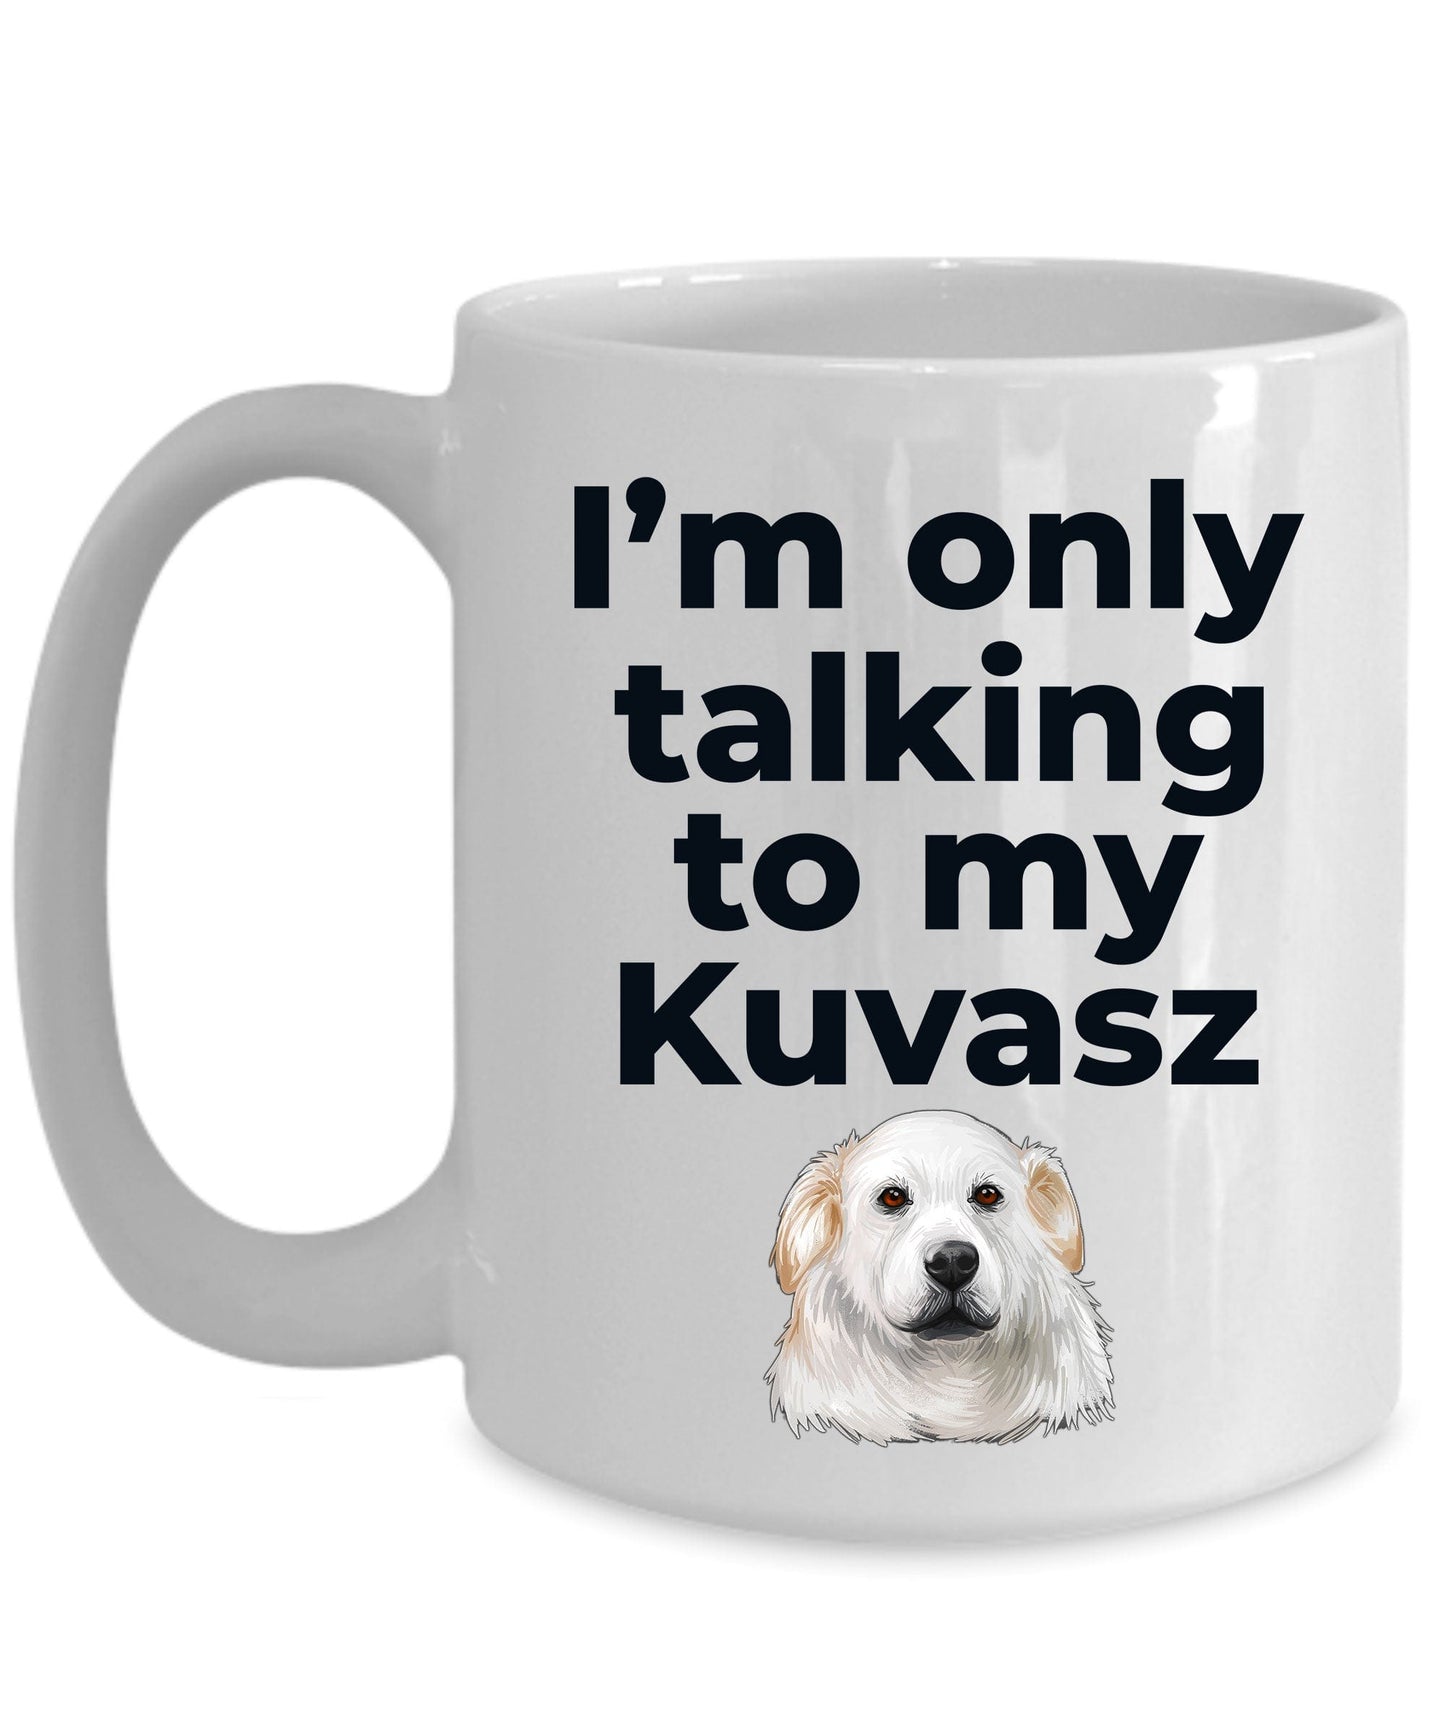 Kuvasz Dog Funny Coffee Mug - I'm only talking to my Kuvasz